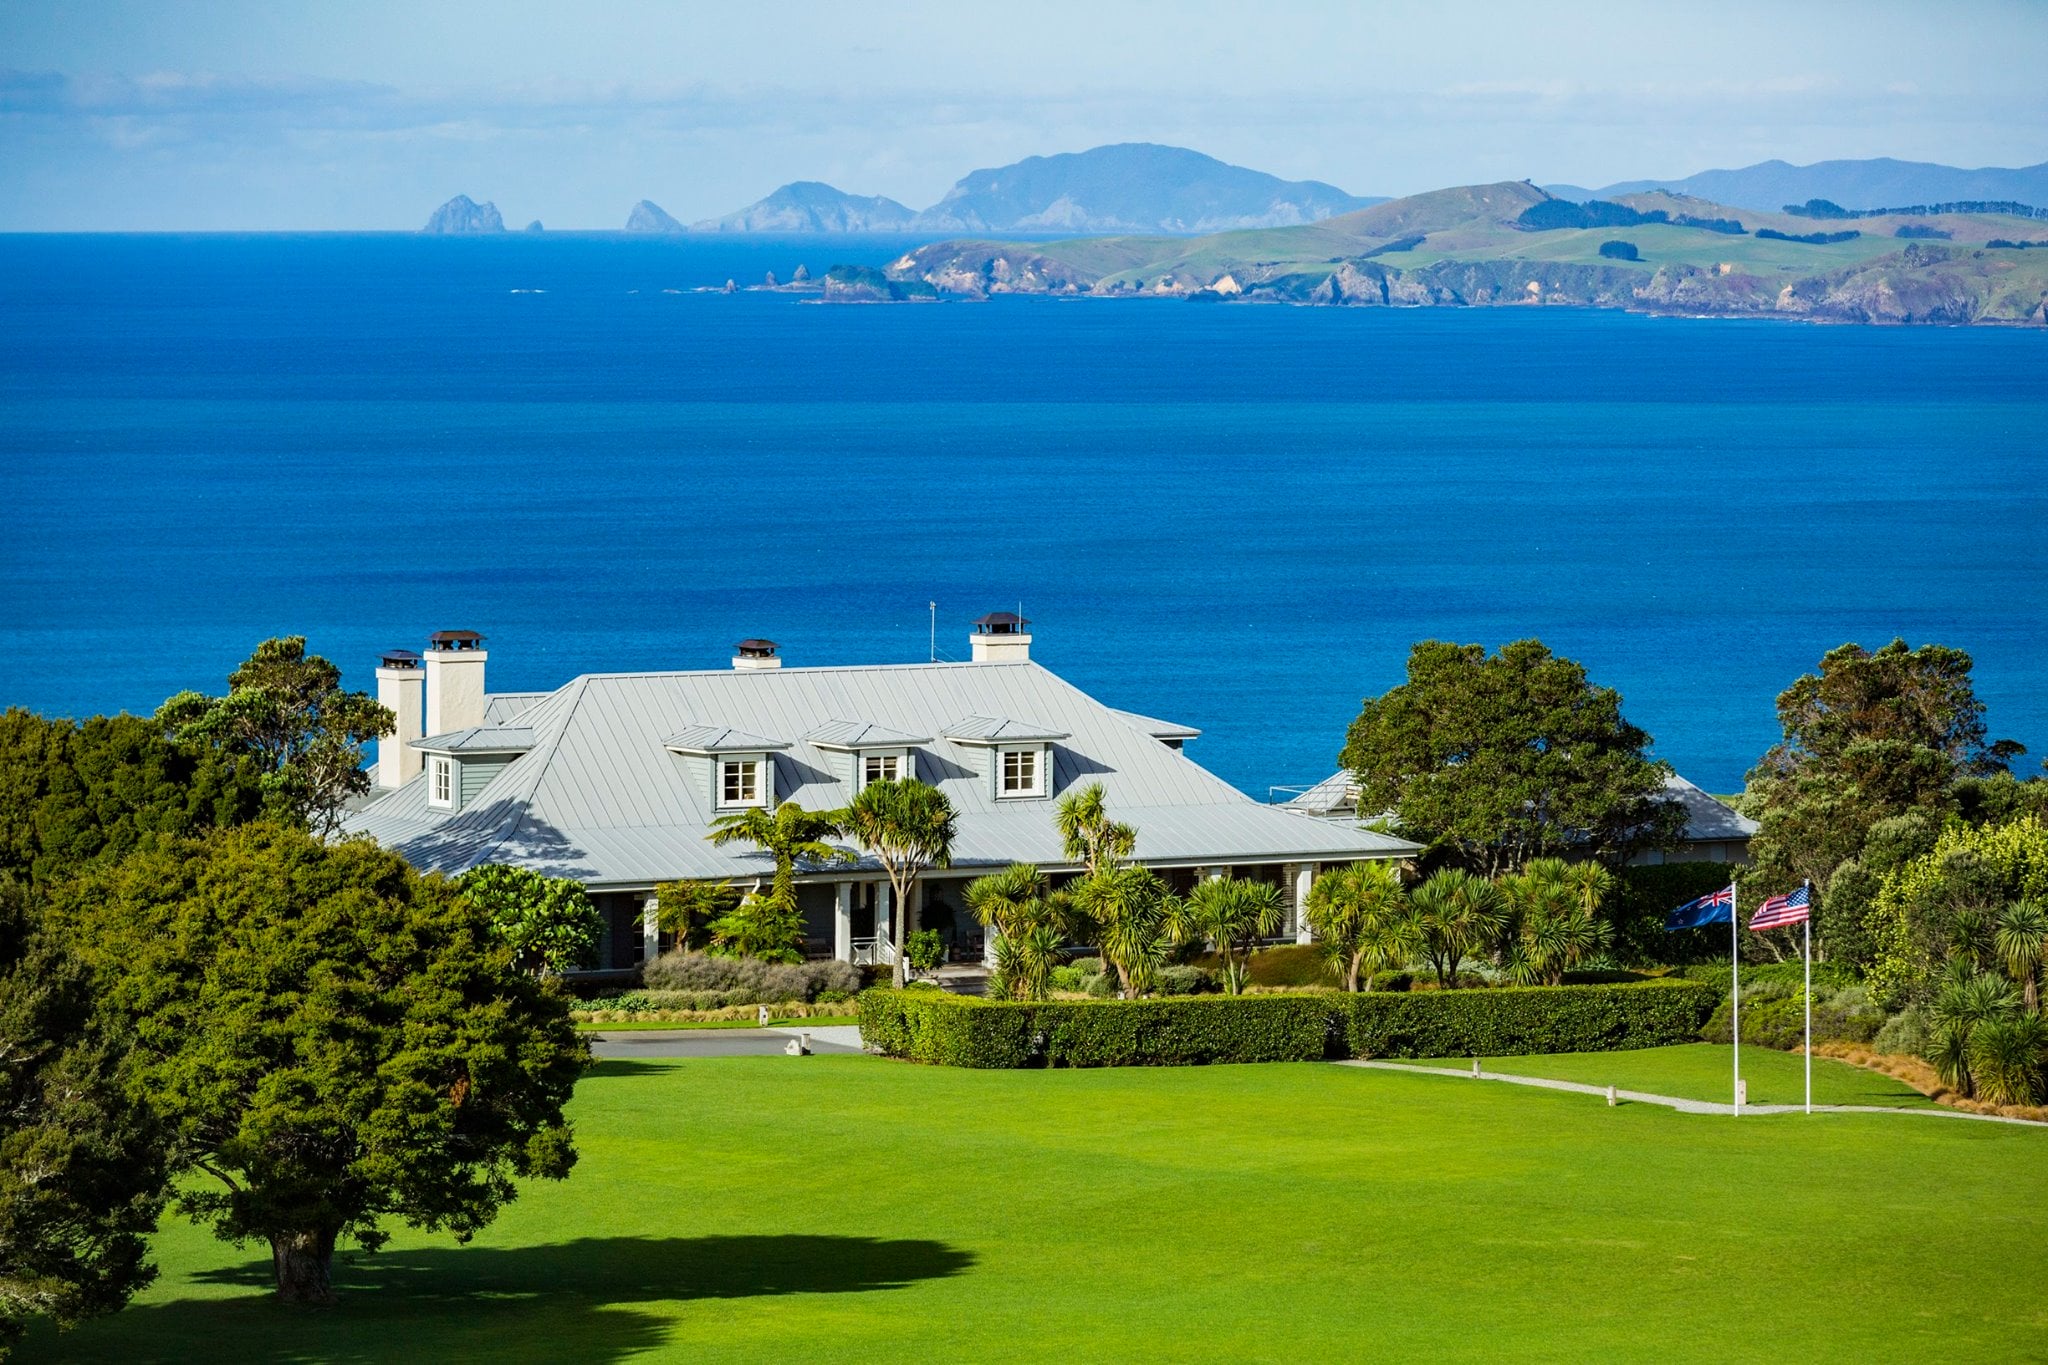 Image overlooking the Lodge at Kauri Cliffs and Matauri Bay, New Zealand